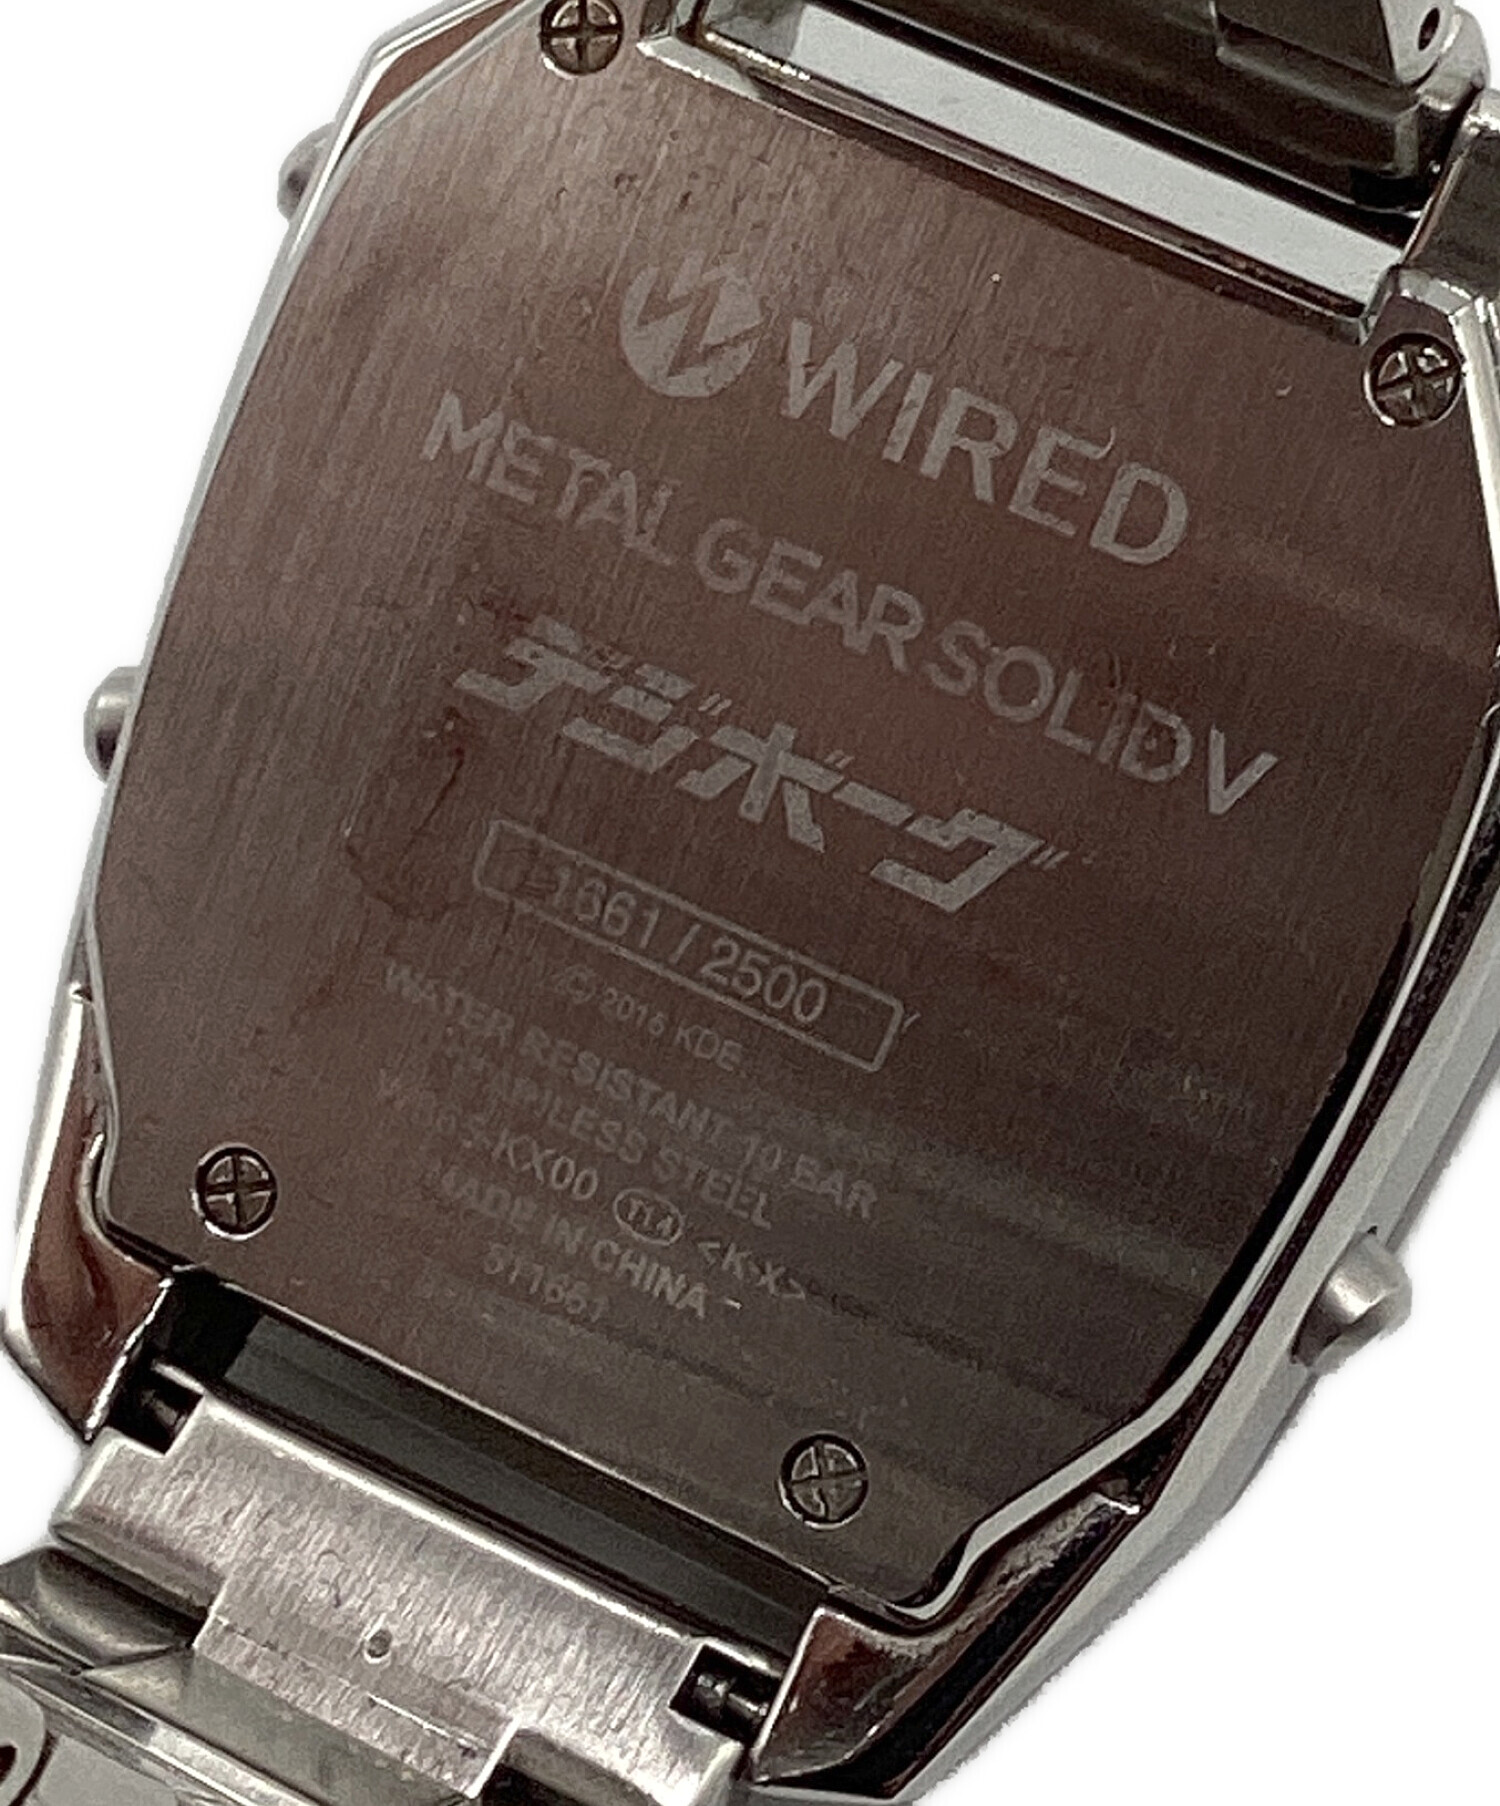 WIRED METAL GEAR SOLID V デジボーグ - 腕時計(デジタル)